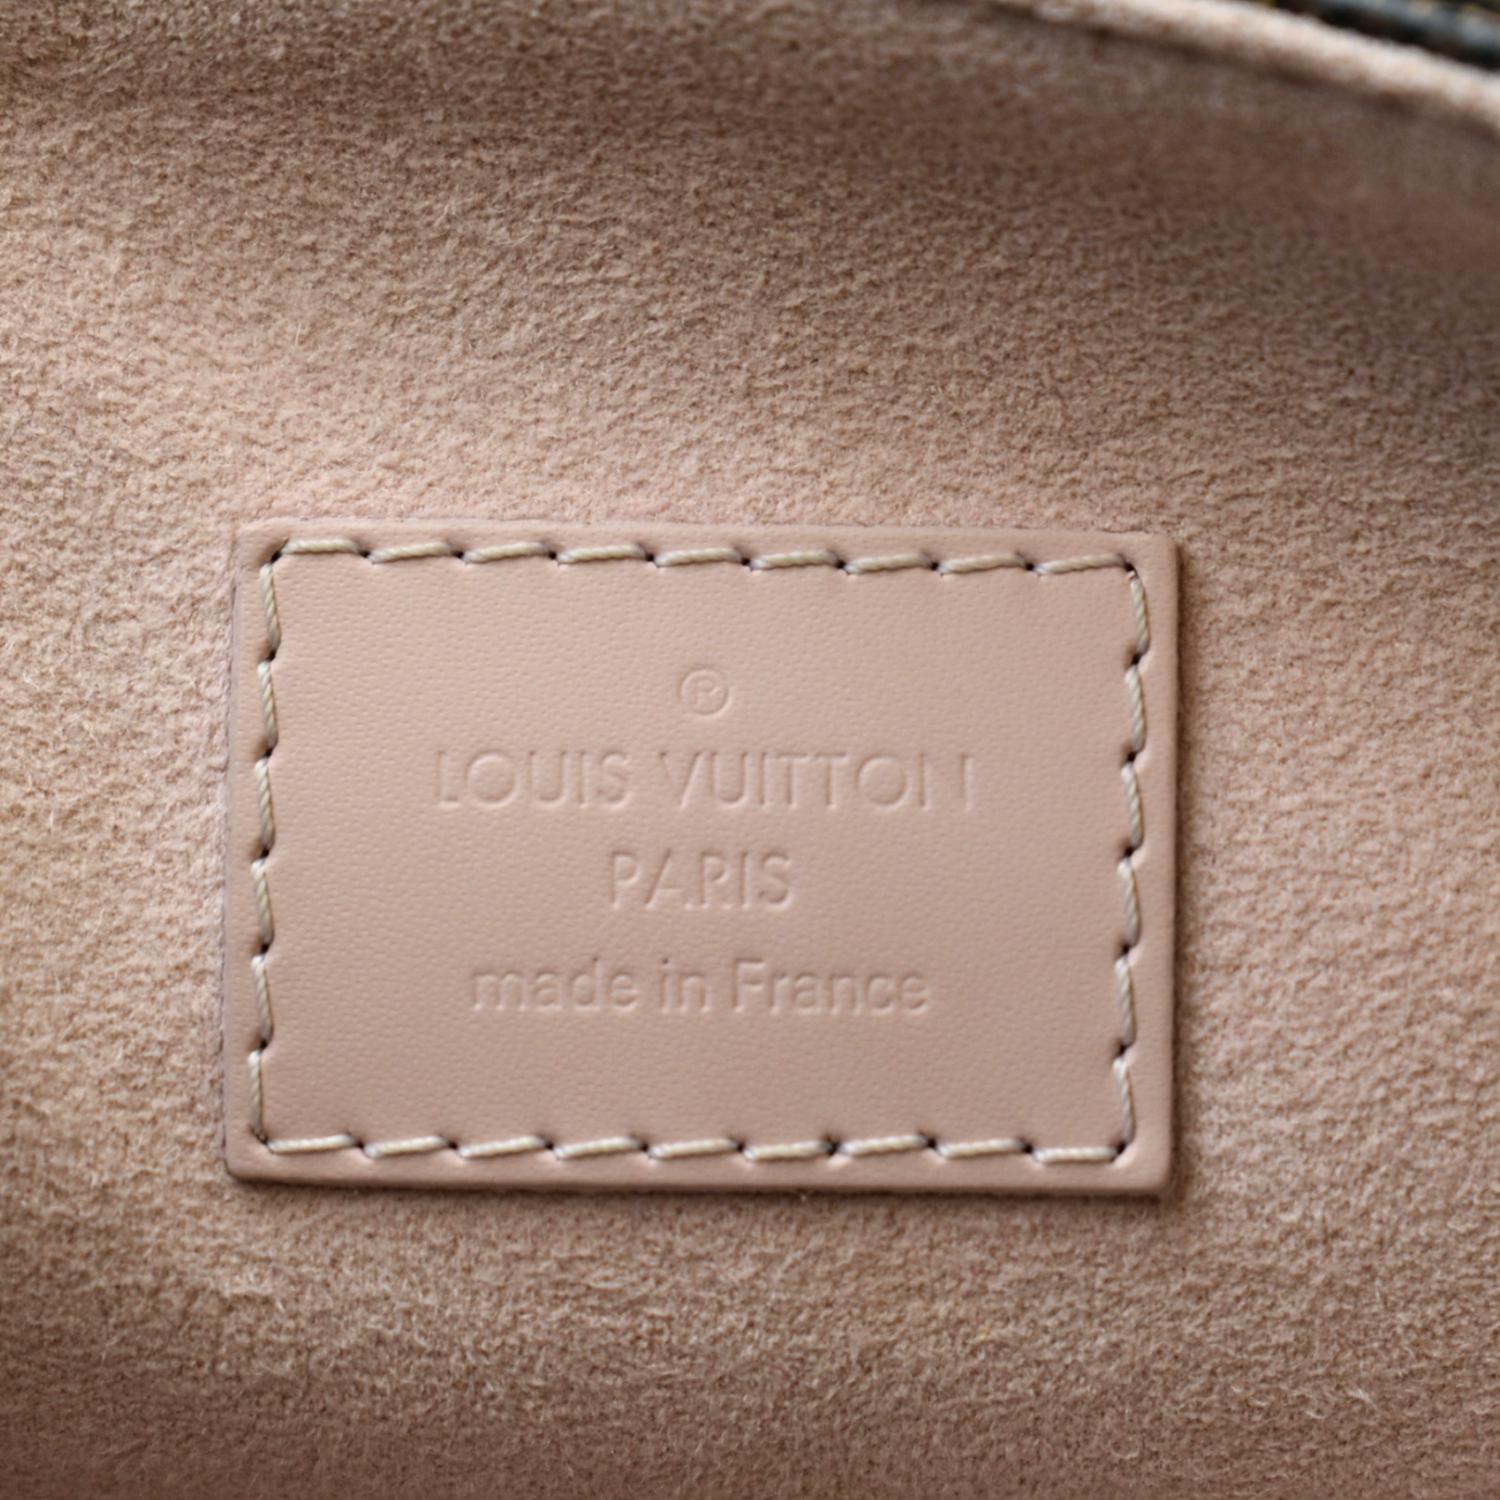 NEW NEW NEW🎉 Helloooooo GORGEOUS😍 Louis Vuitton Damier Ebene Caissa Hobo  Rose Ballerine bag-$1300 Come shop with us! Monday-Thursday…